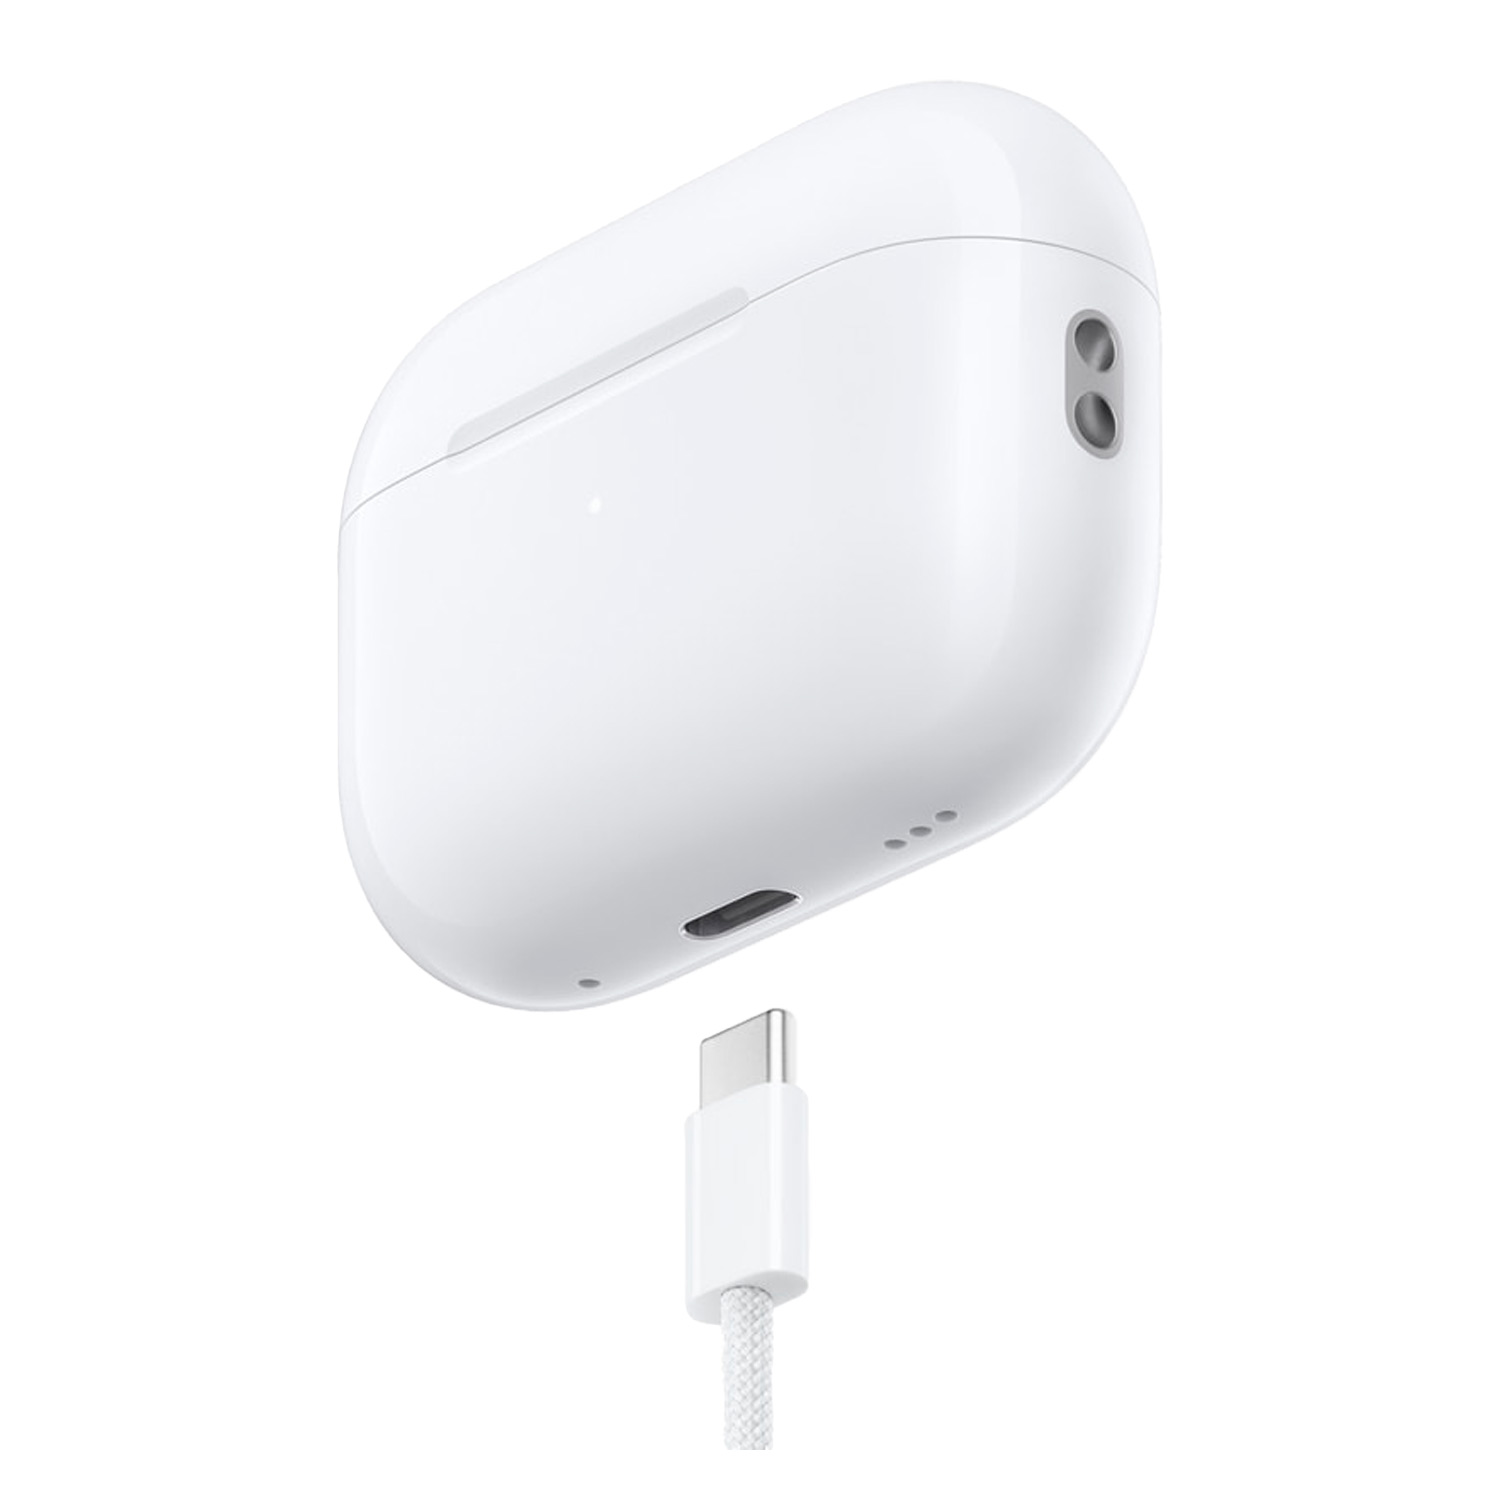 Fone de Ouvido Apple Airpods Pro 2 MTJV3AM/A Wireless - Branco (Deslacrado) (Caixa Danificada)